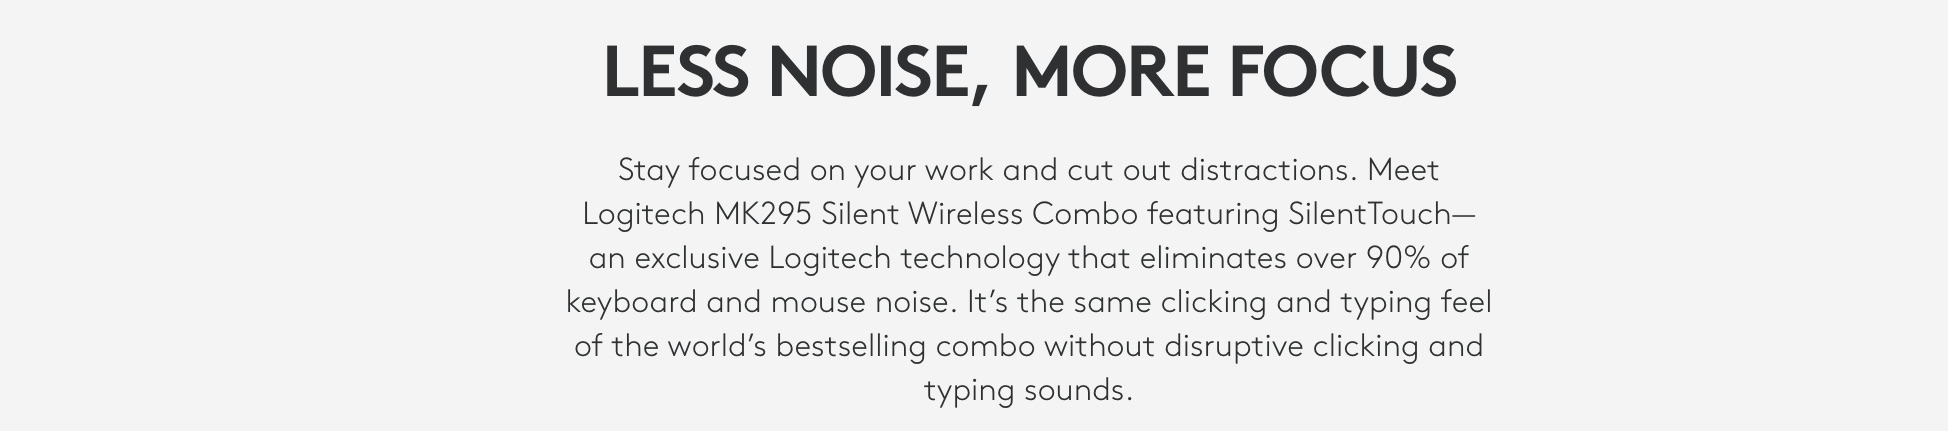 Logitech-MK295-Silent-Wireless-Keyboard-And-Mouse-Combo-Description-1